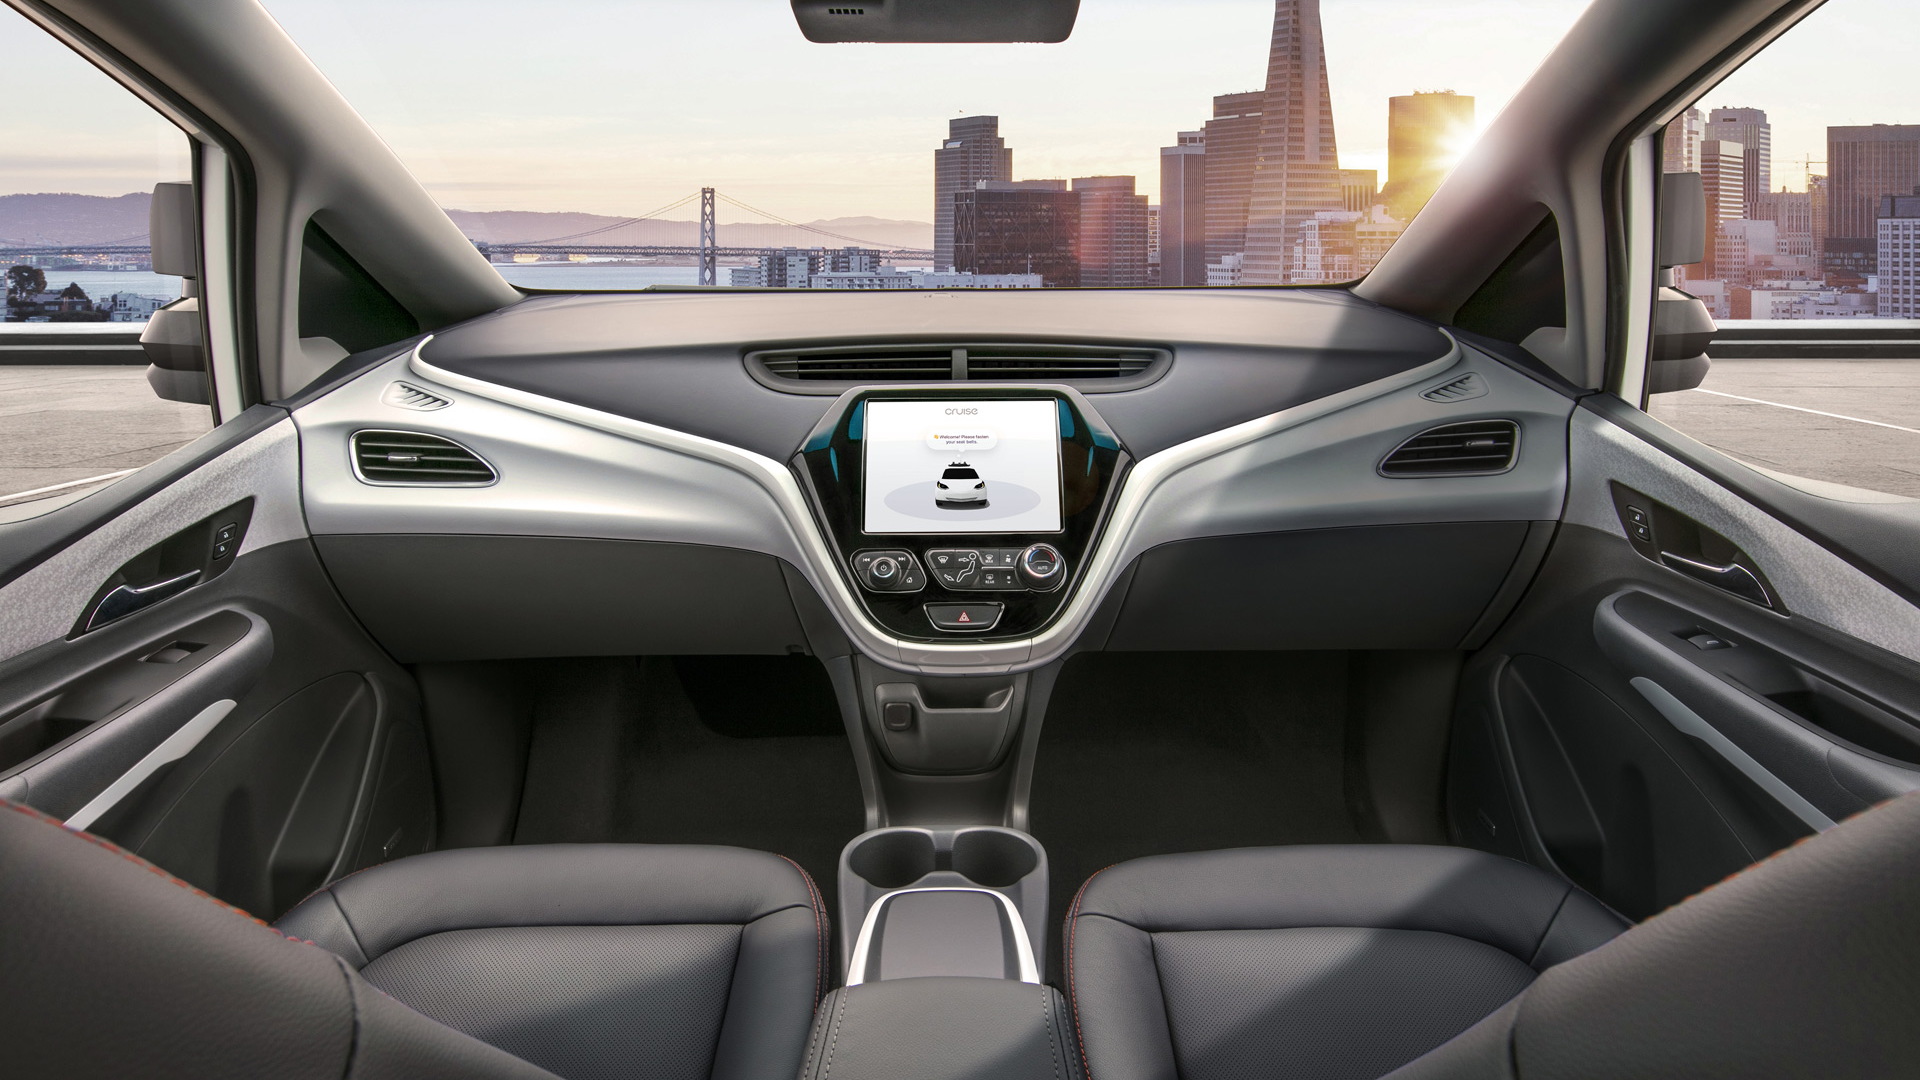 General Motors' Cruise AV self-driving car has no steering wheel or pedals